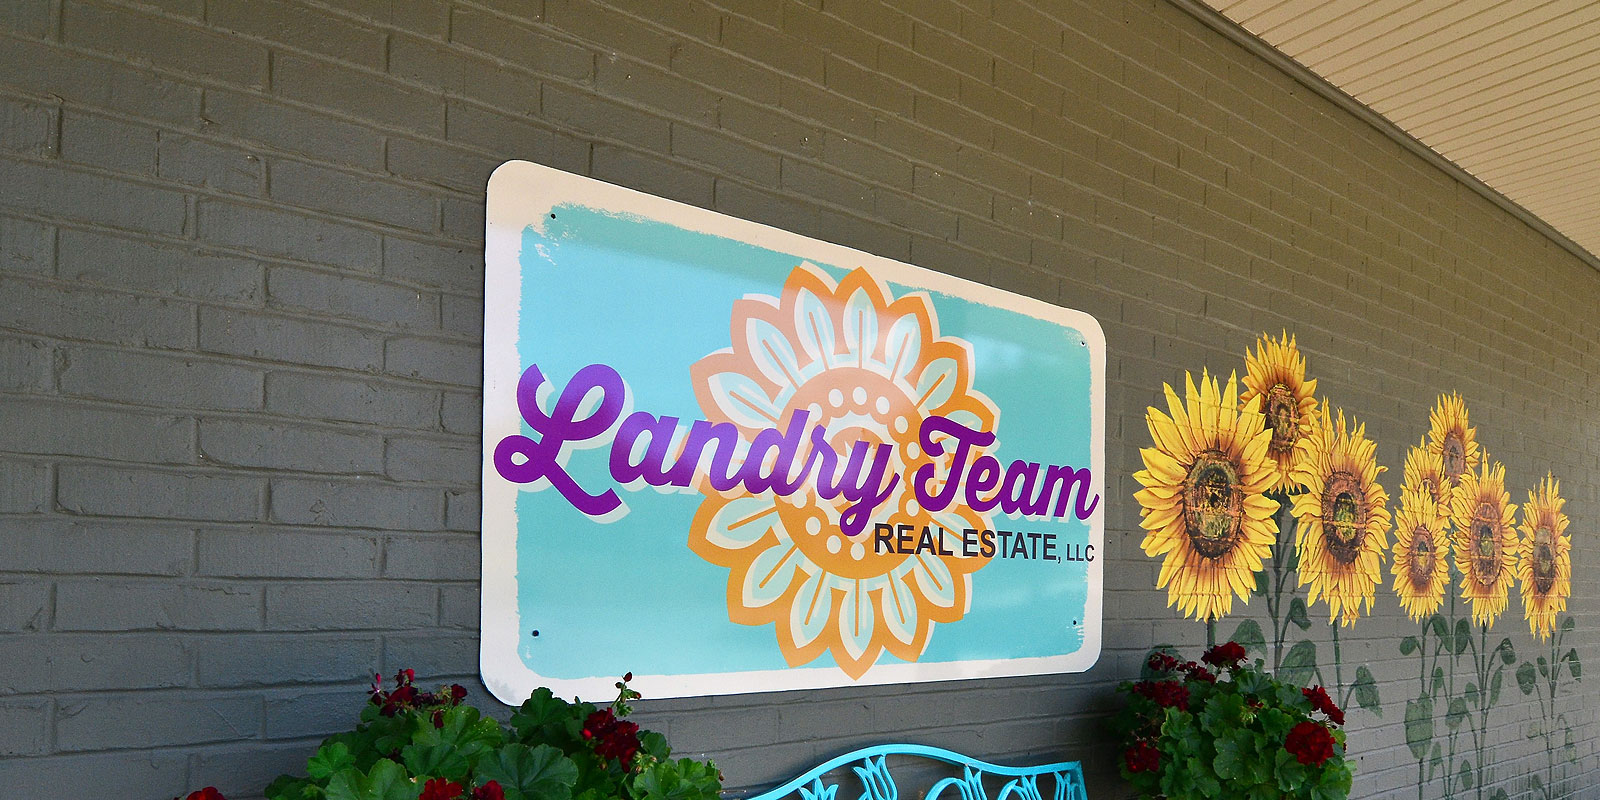 Company Logo - Landry Team Real Estate, LCC